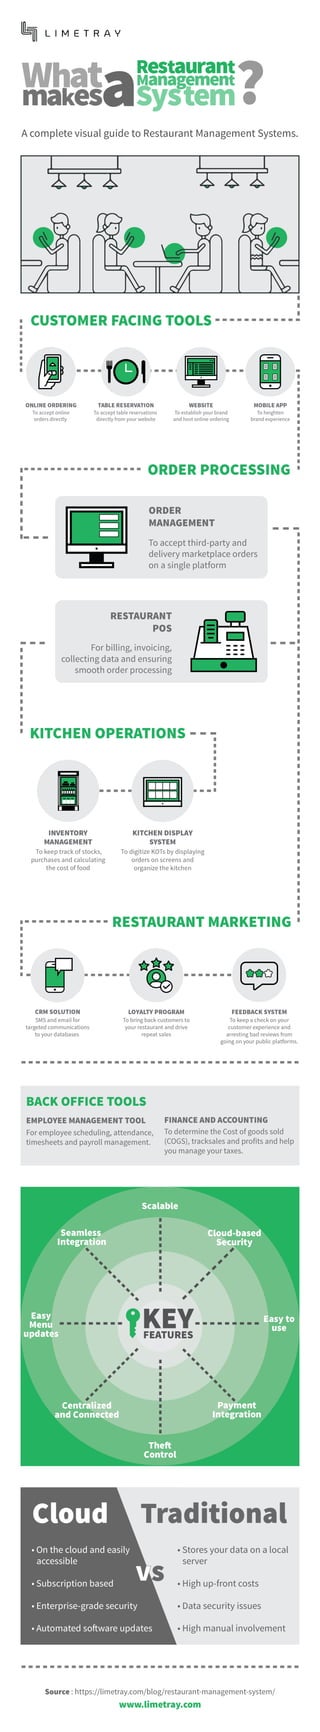 Limetray Restaurant Management System Infographic